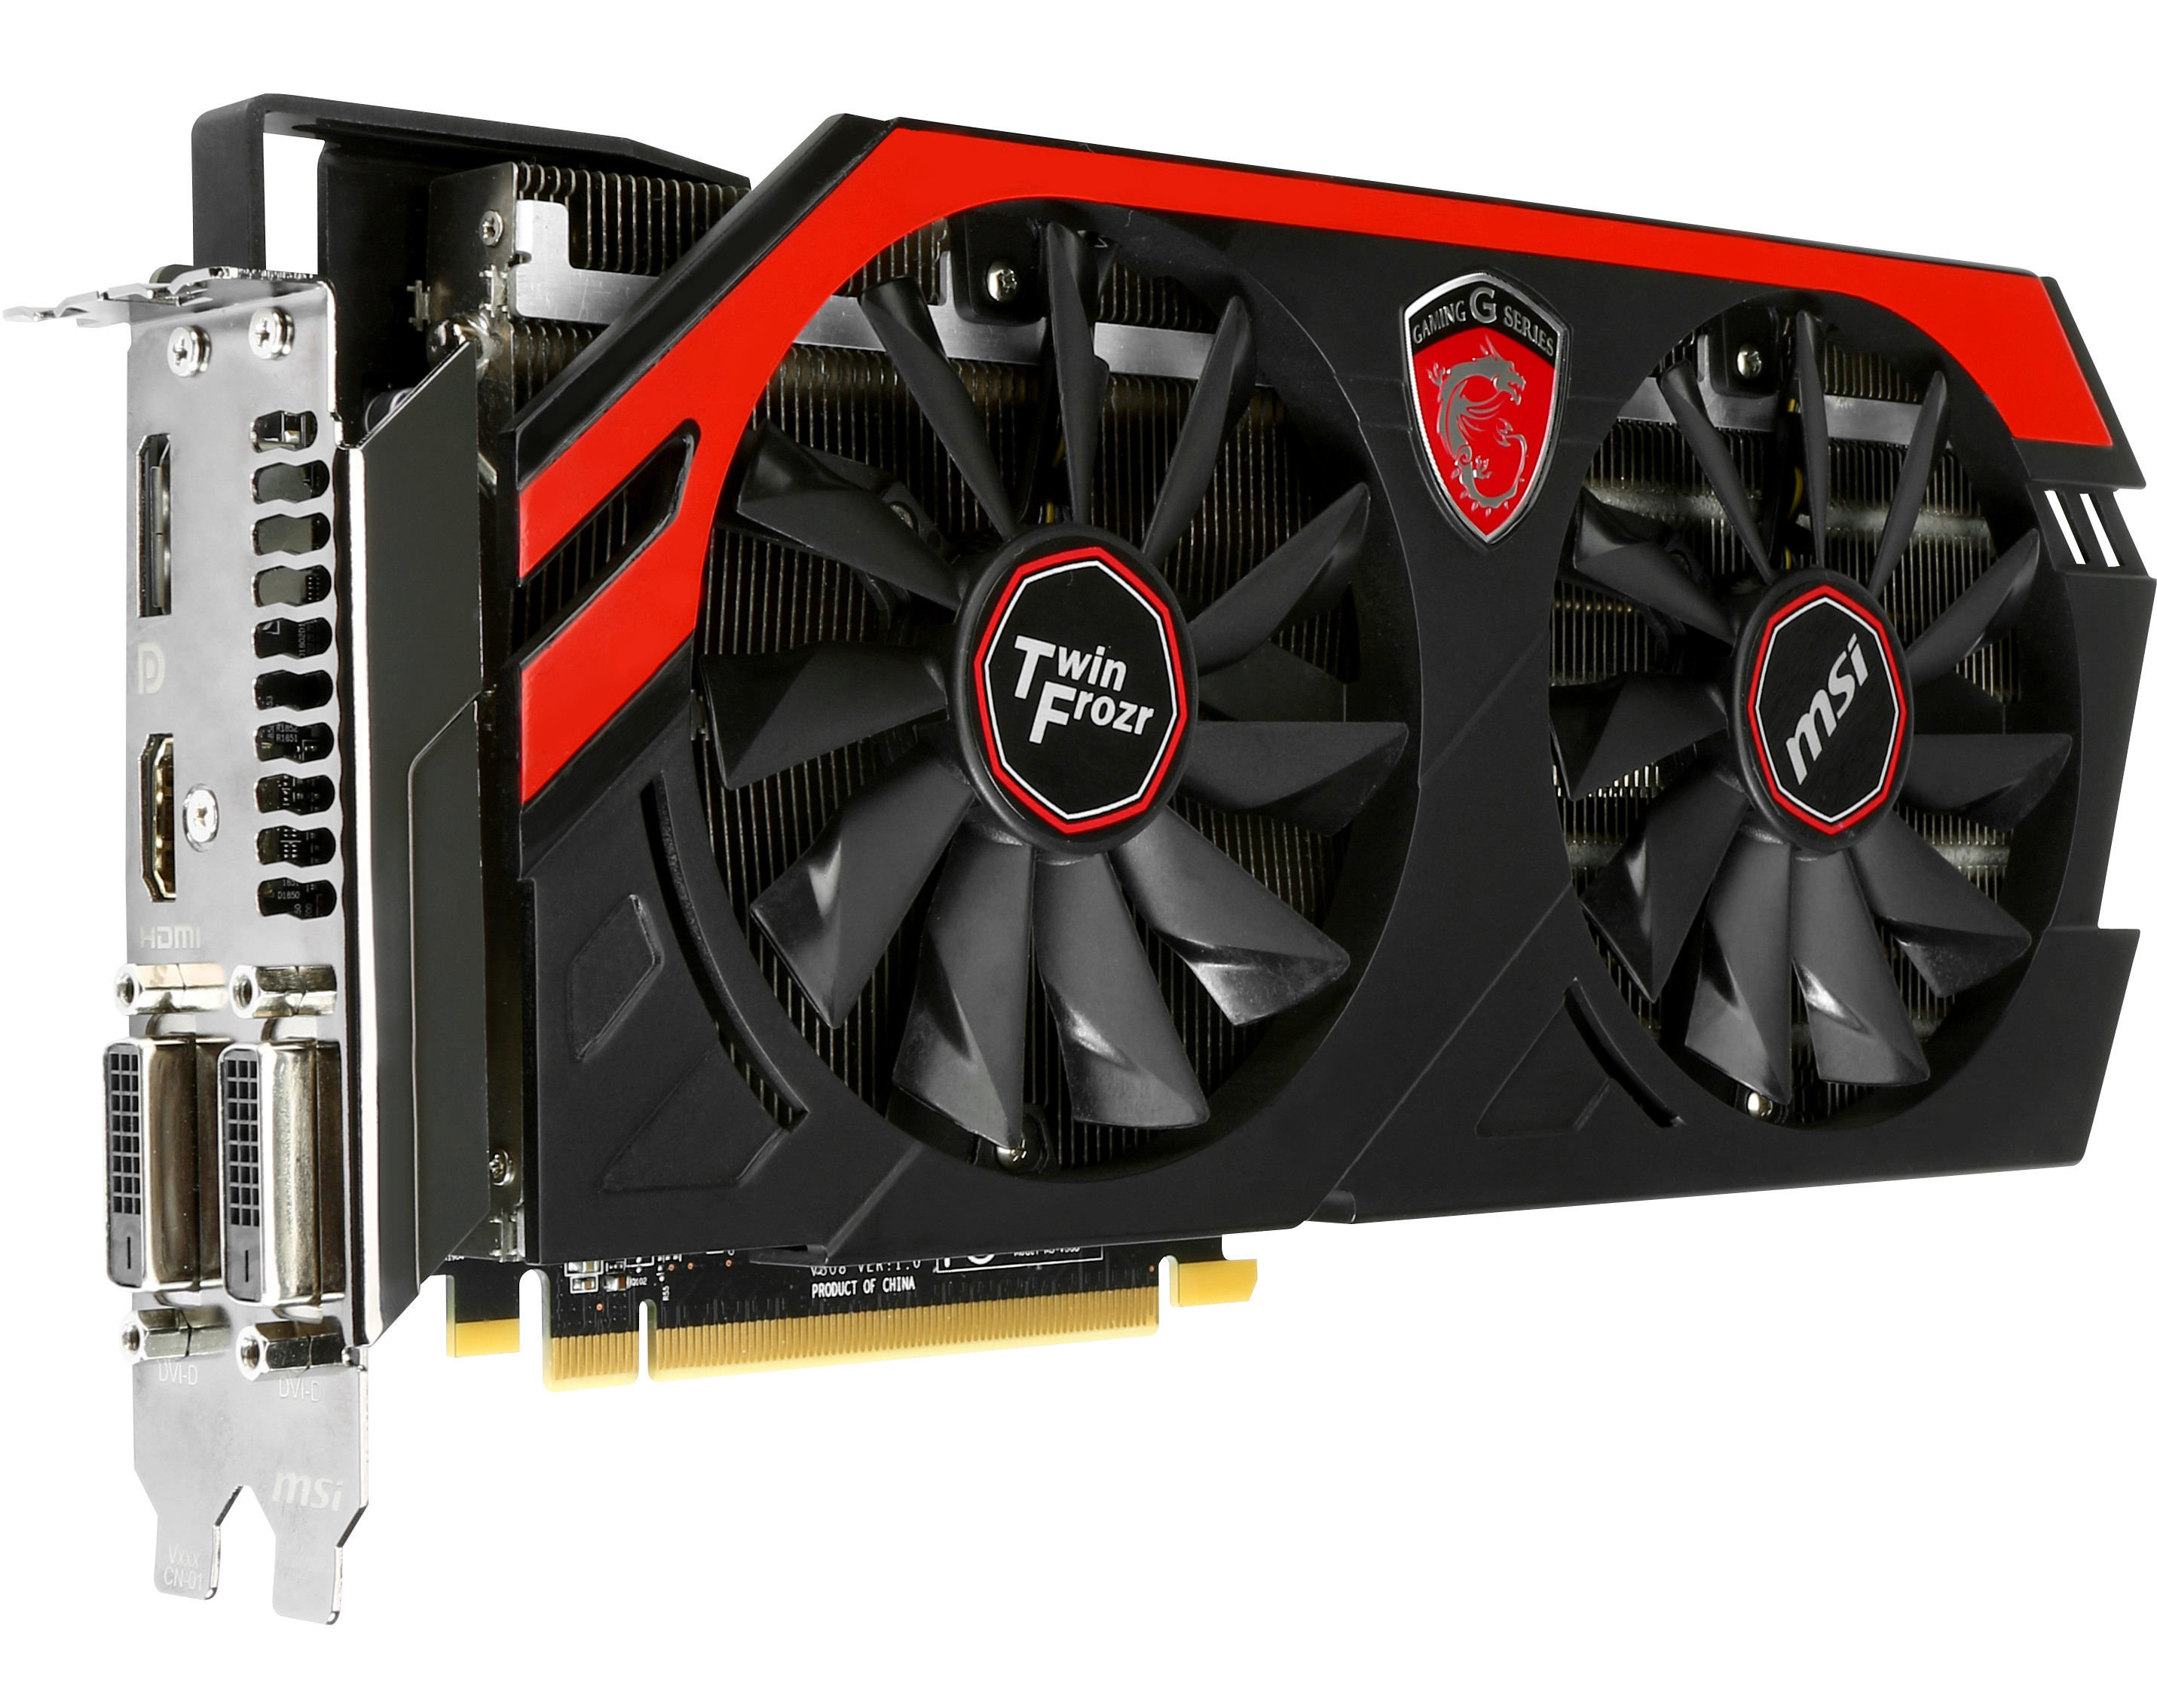 MSI Announces Radeon R9 290X Gaming 8GB Graphics Card ...